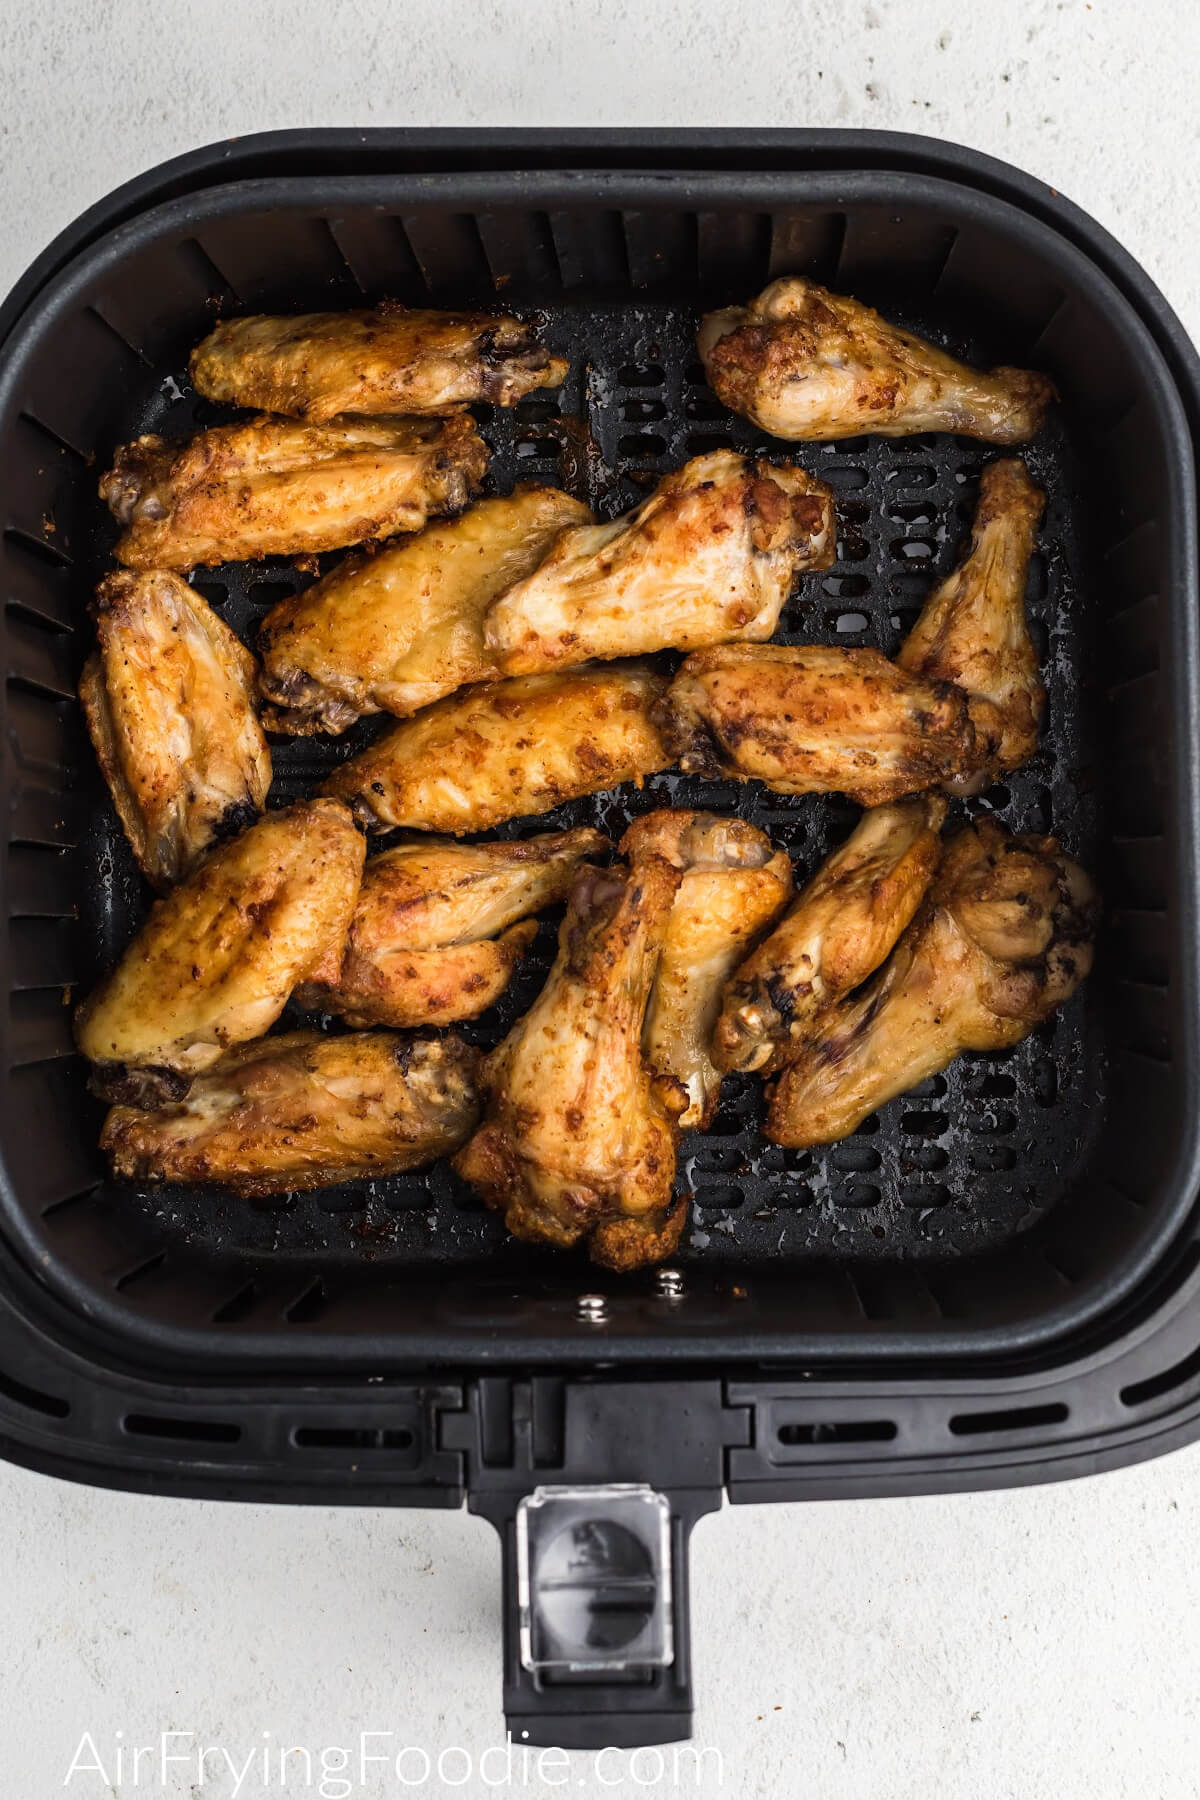 Chicken wings in the air fryer basket.